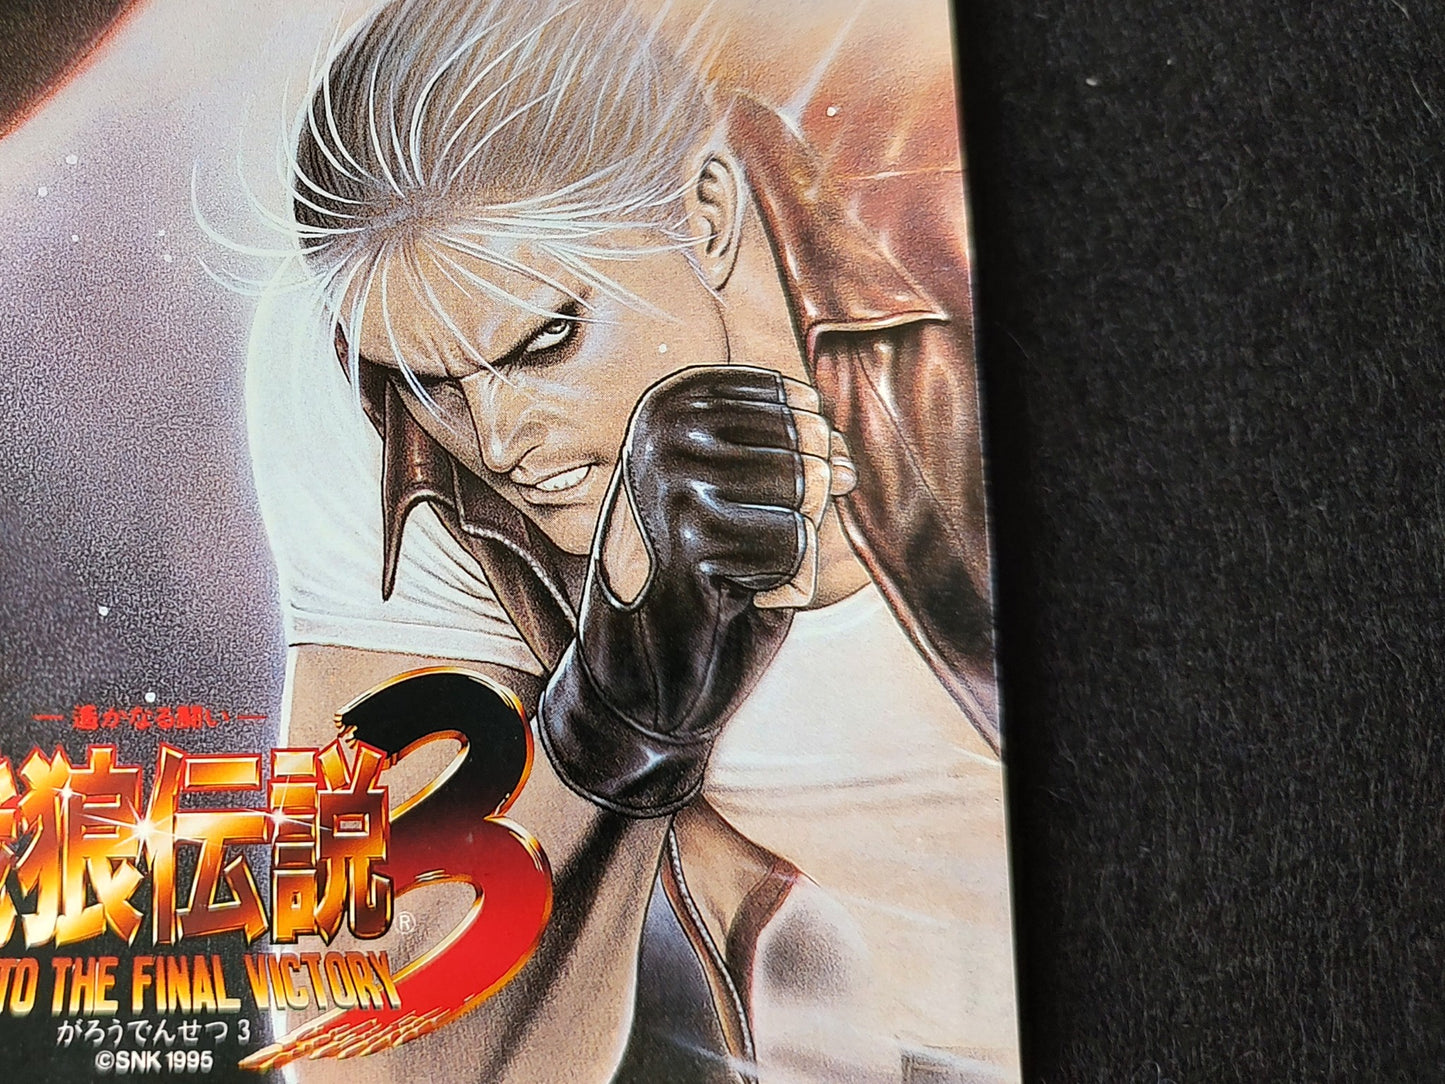 Fatal Fury 3 Garo Densetsu 3 SNK NEO GEO AES Cartridge, Manual Boxed set-f0327-